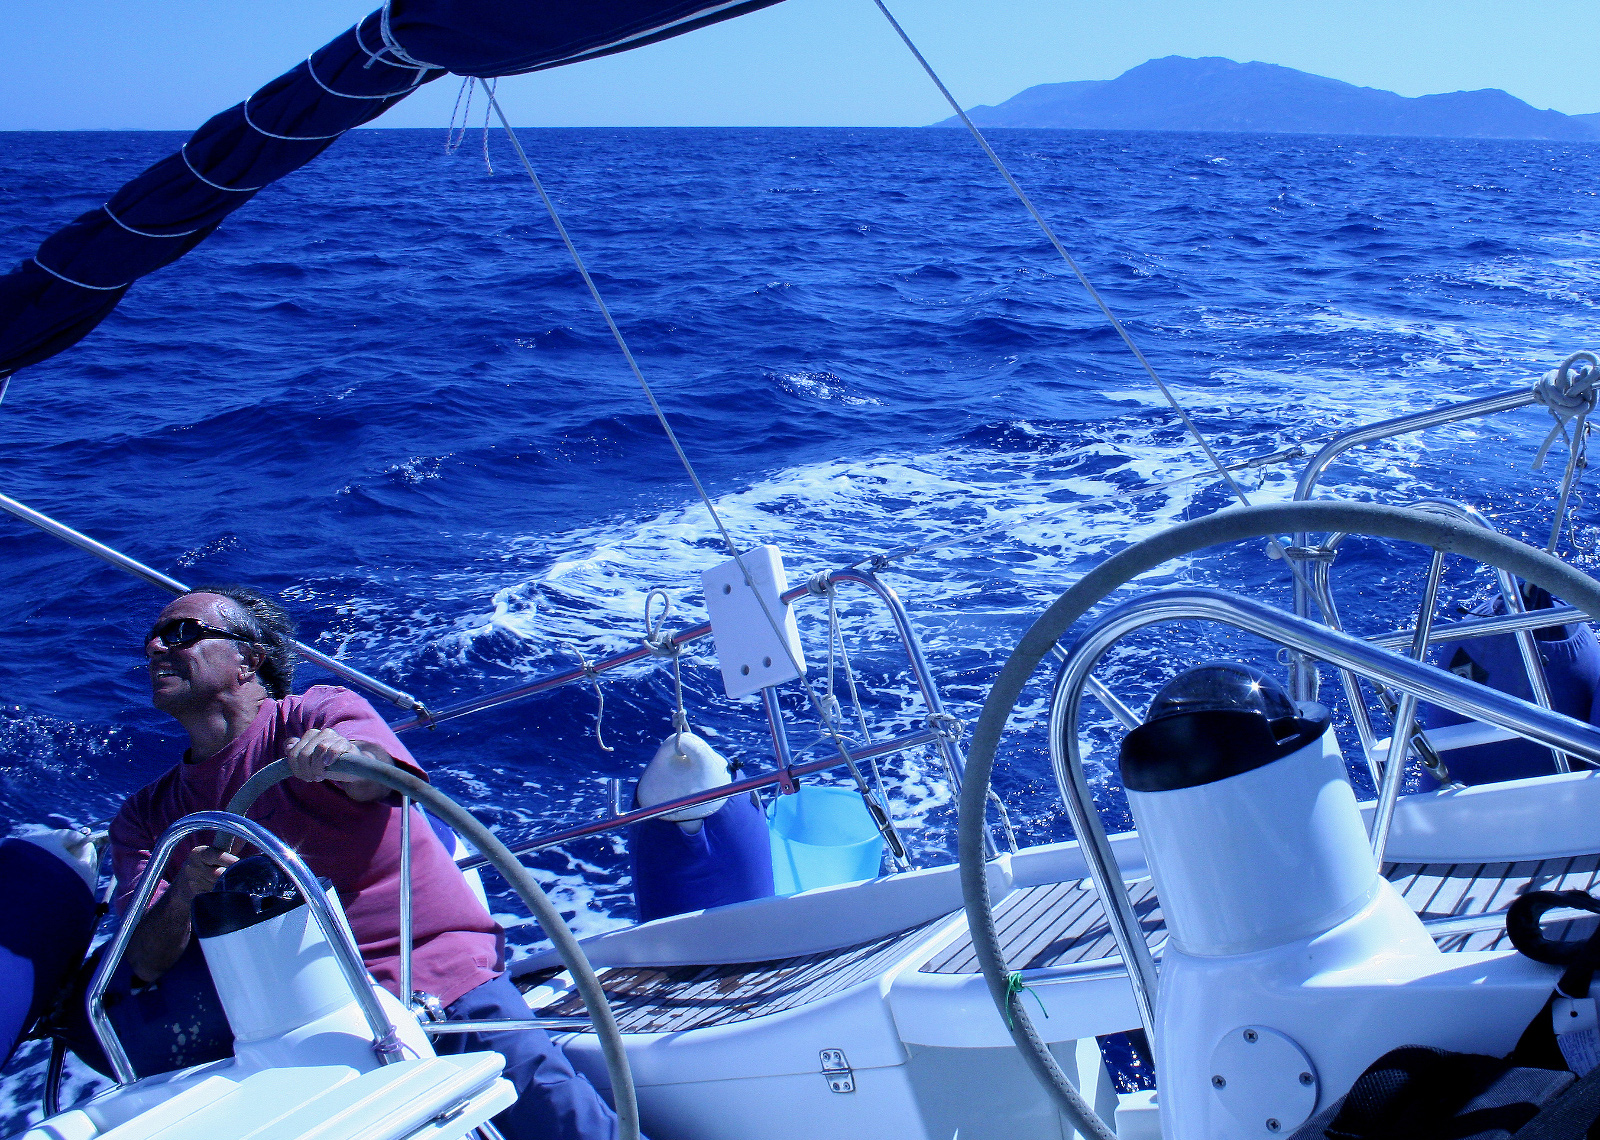 The photo shows Fulvio who goes sailing